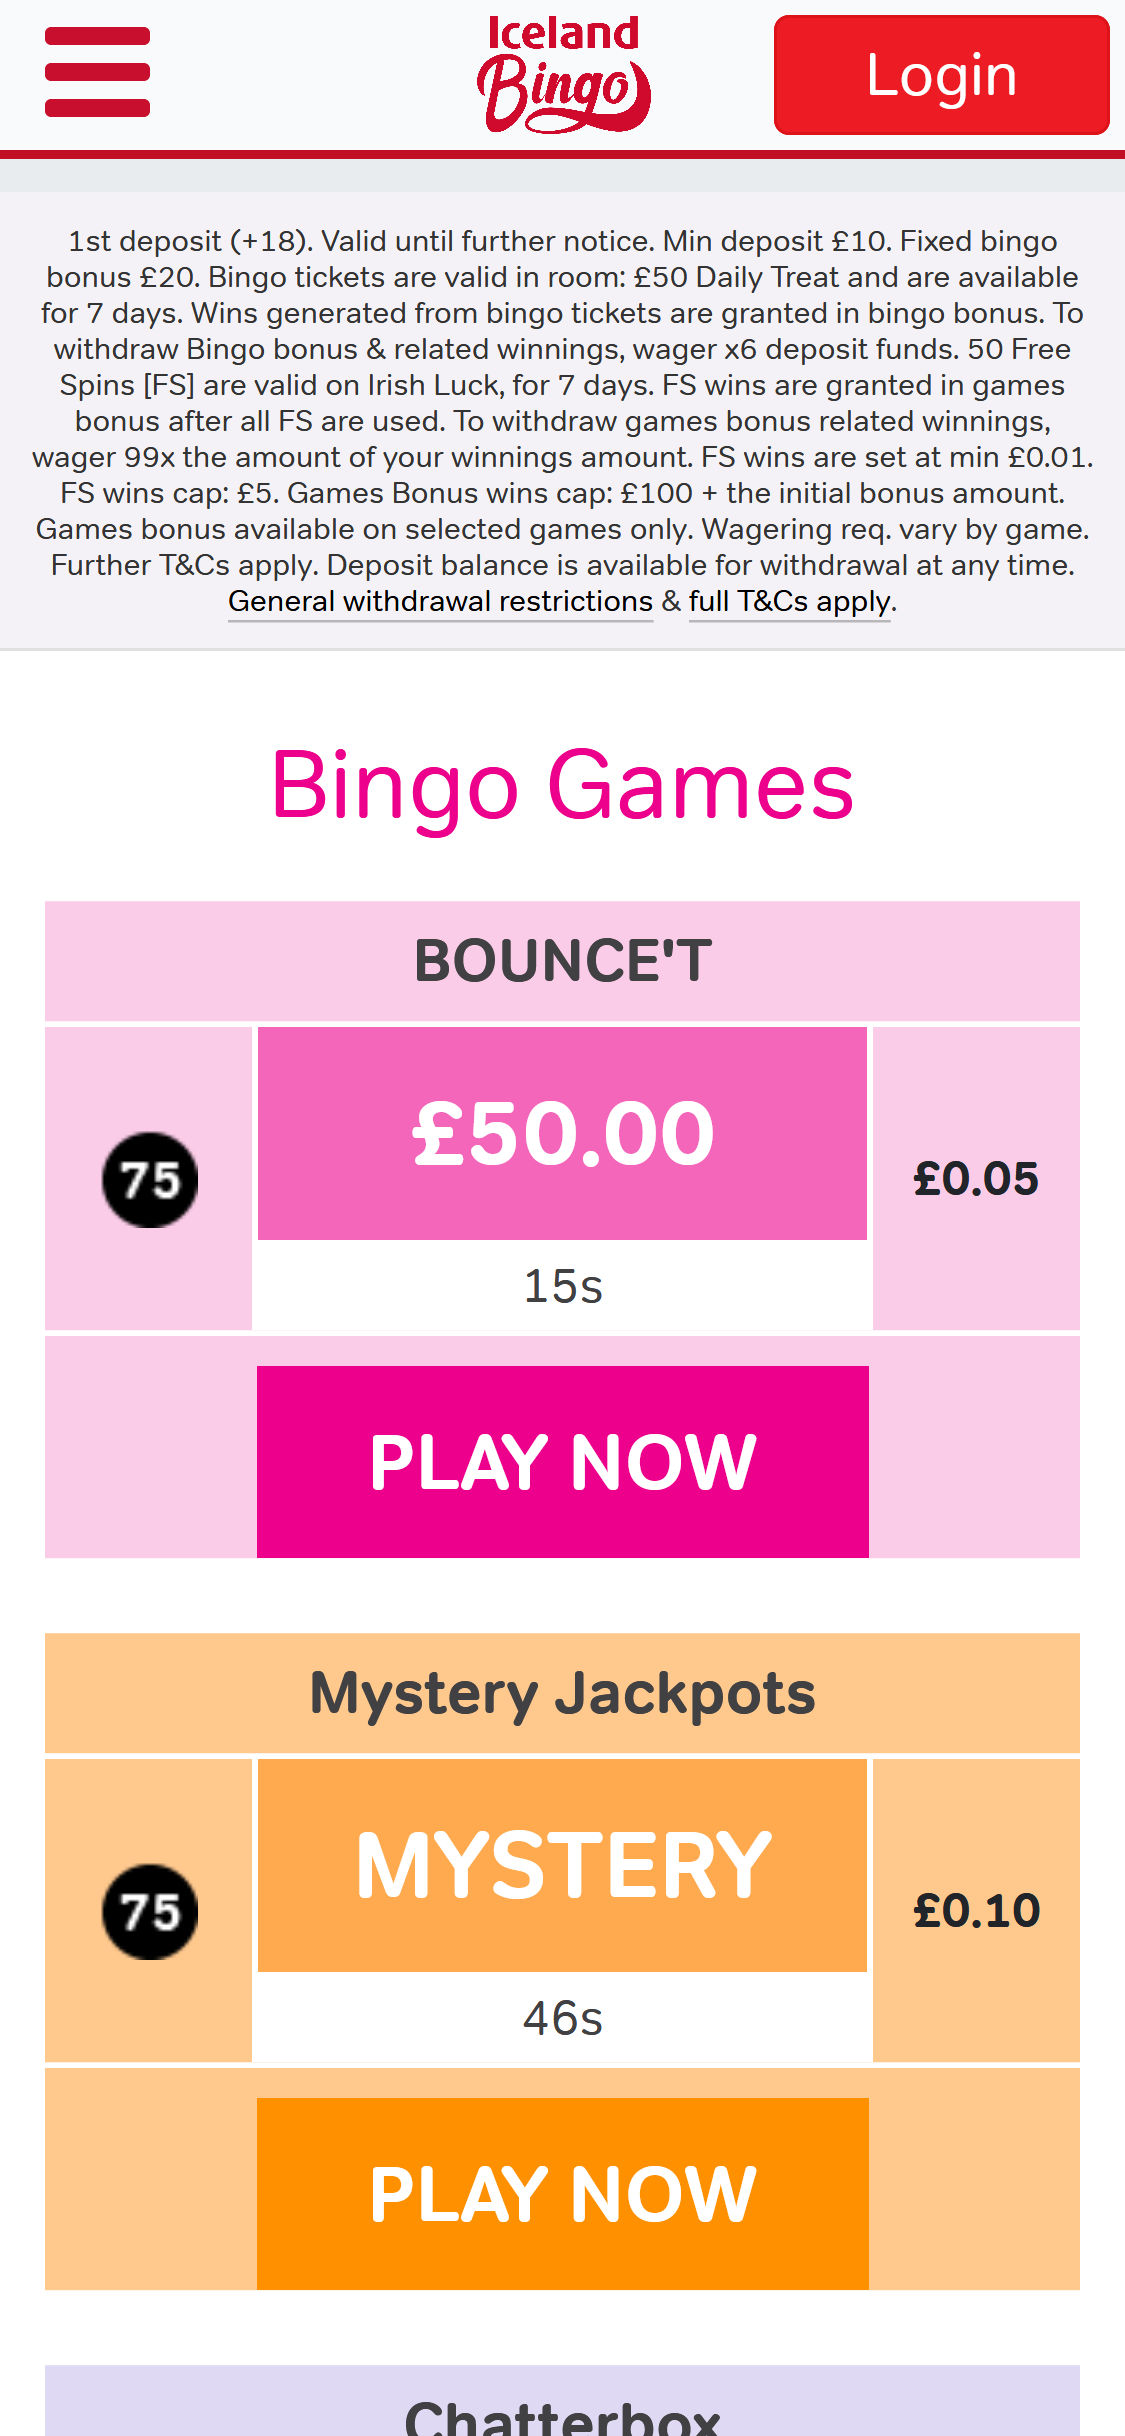 Bingo Iceland Casino Mobile Review